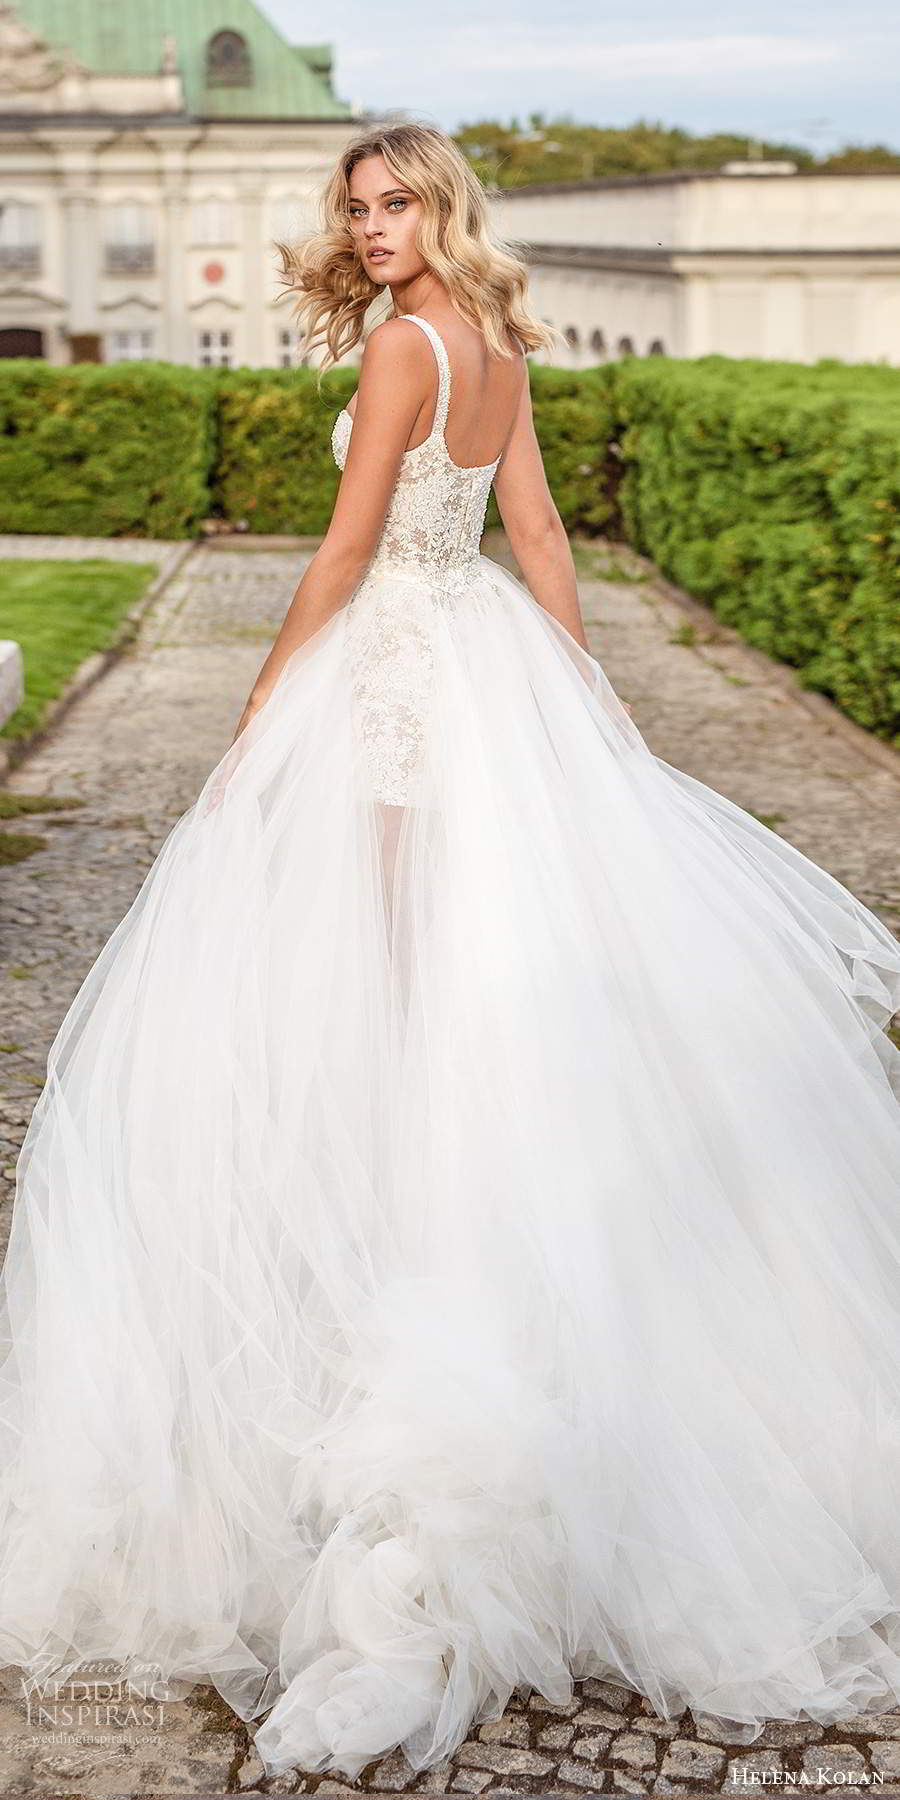 helena kolan 2020 bridal sleeveless straps semi sweetheart neckline fully embellished romantic lace a line ball gown wedding dress chapel train (14) bv